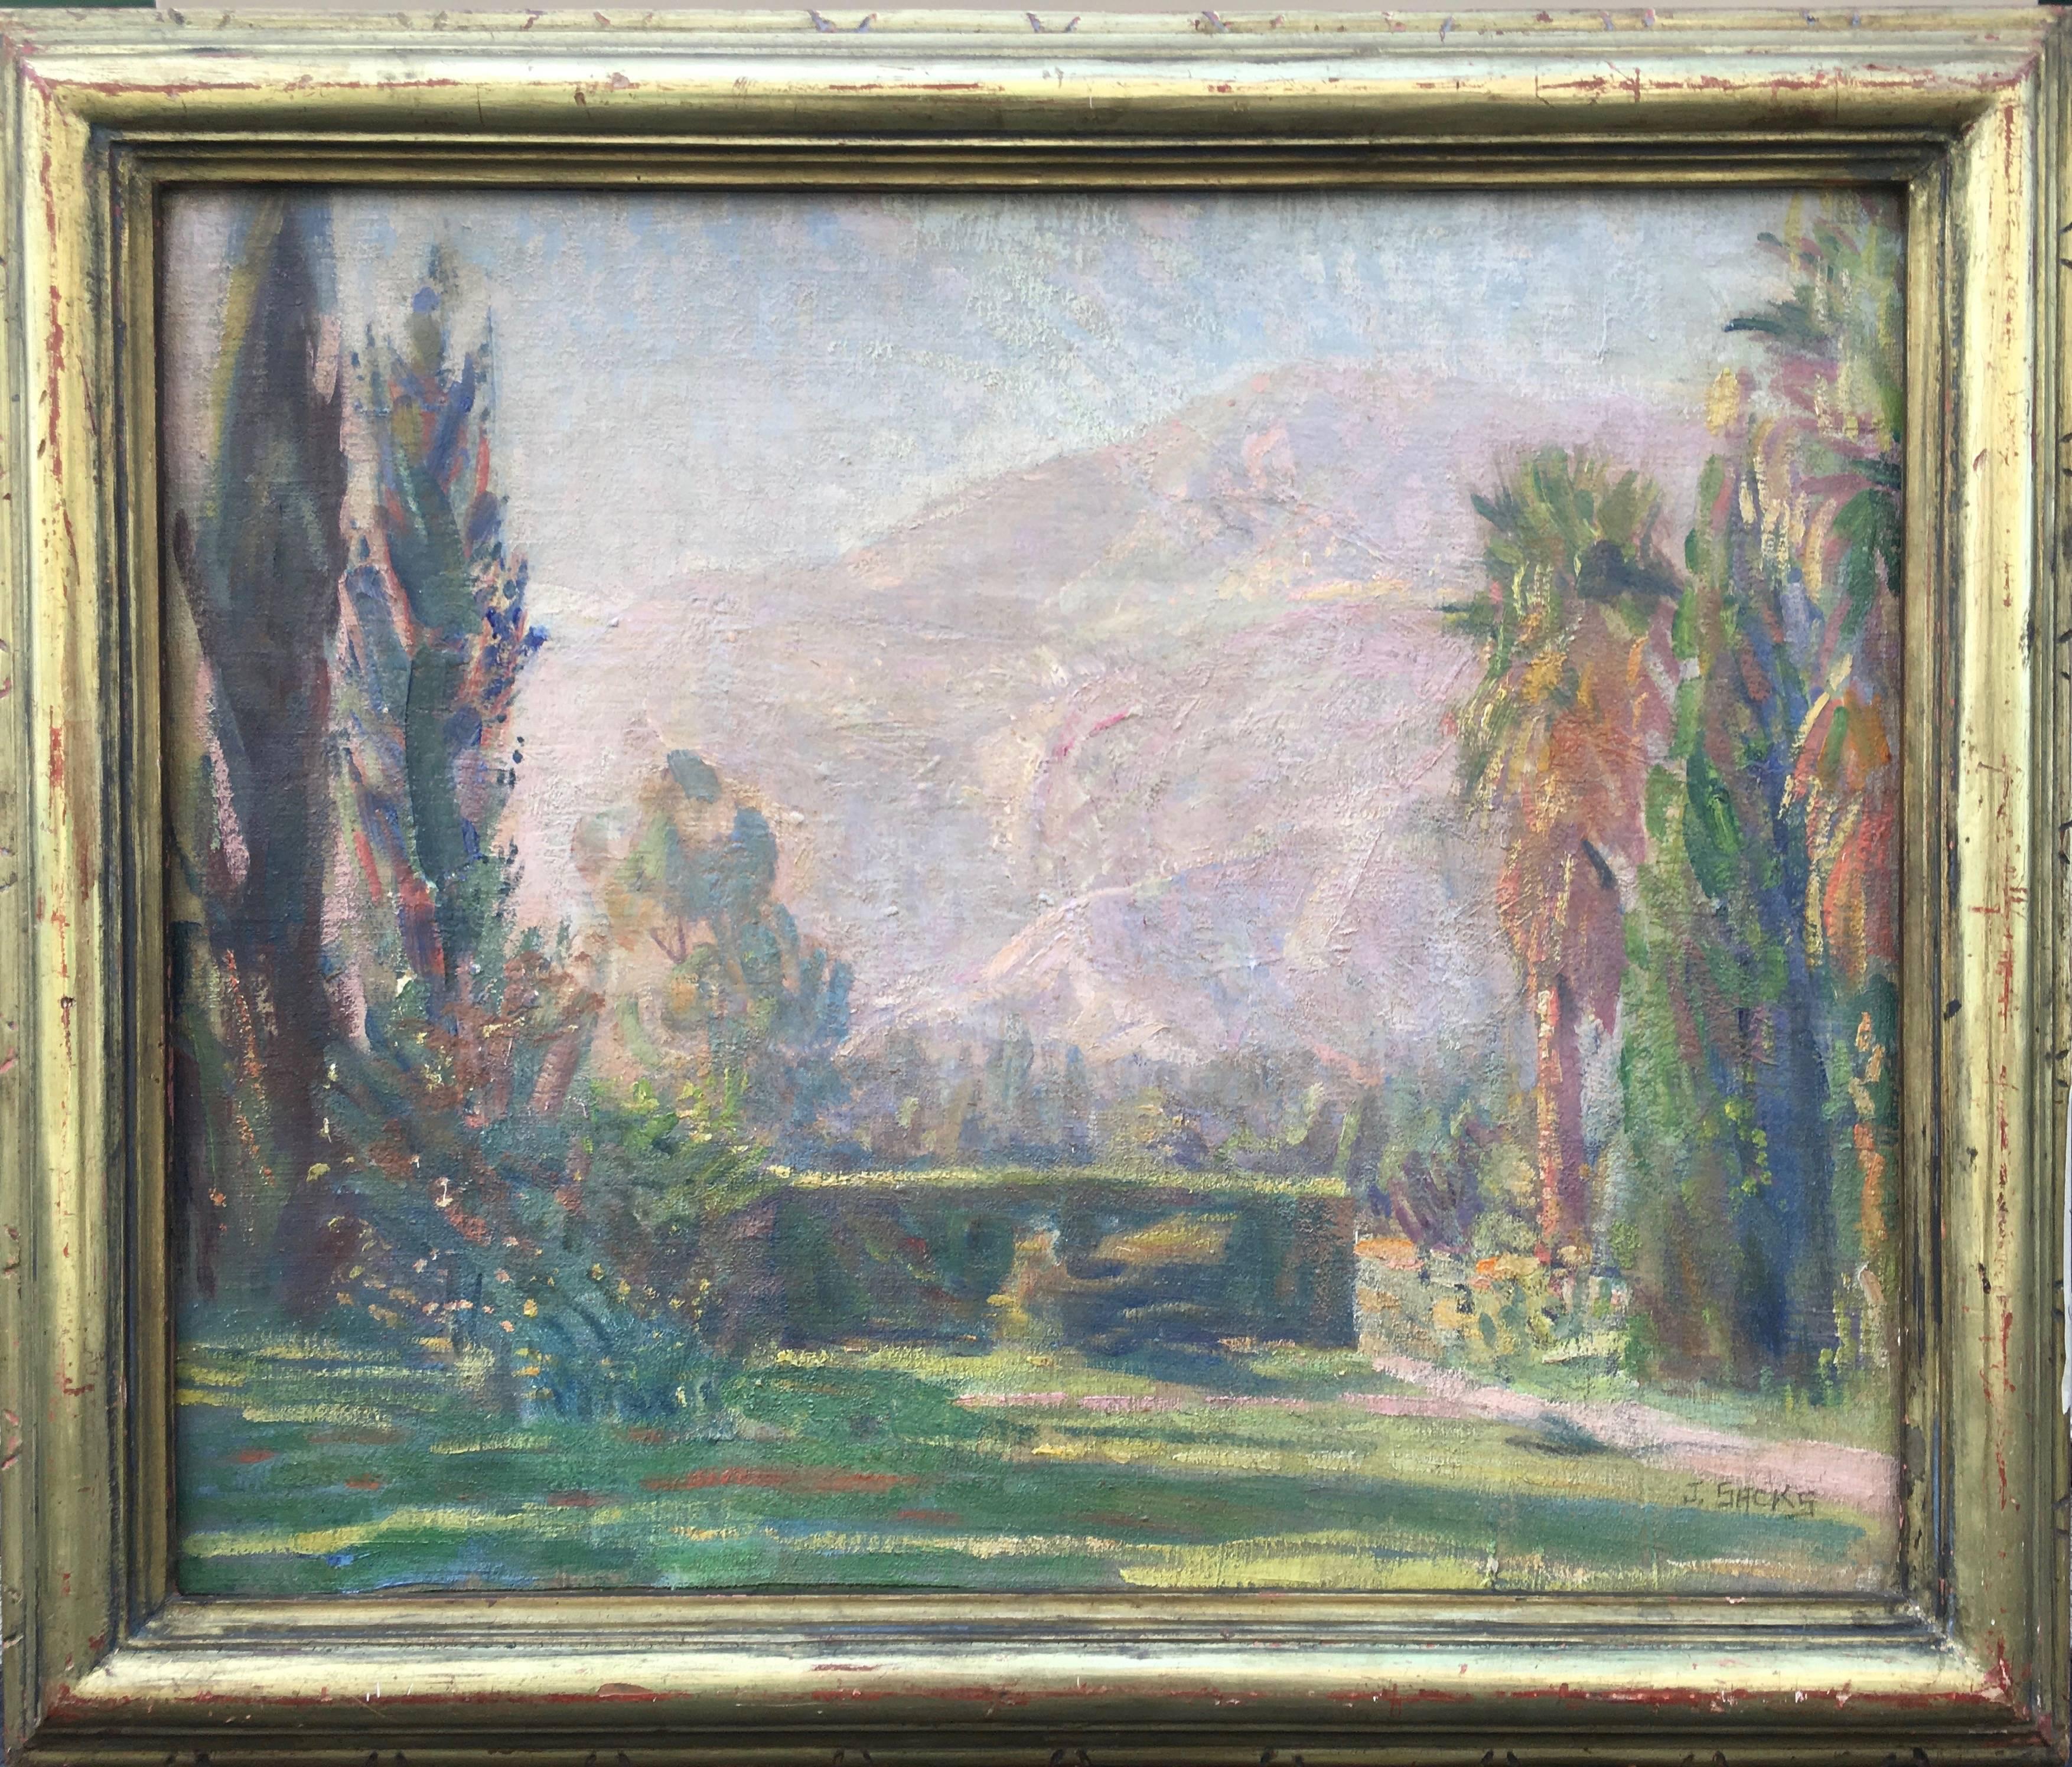 Joseph Sacks Landscape Painting - Impressionist Scene of Garden and Mt. Tamalpais in Marin County, California